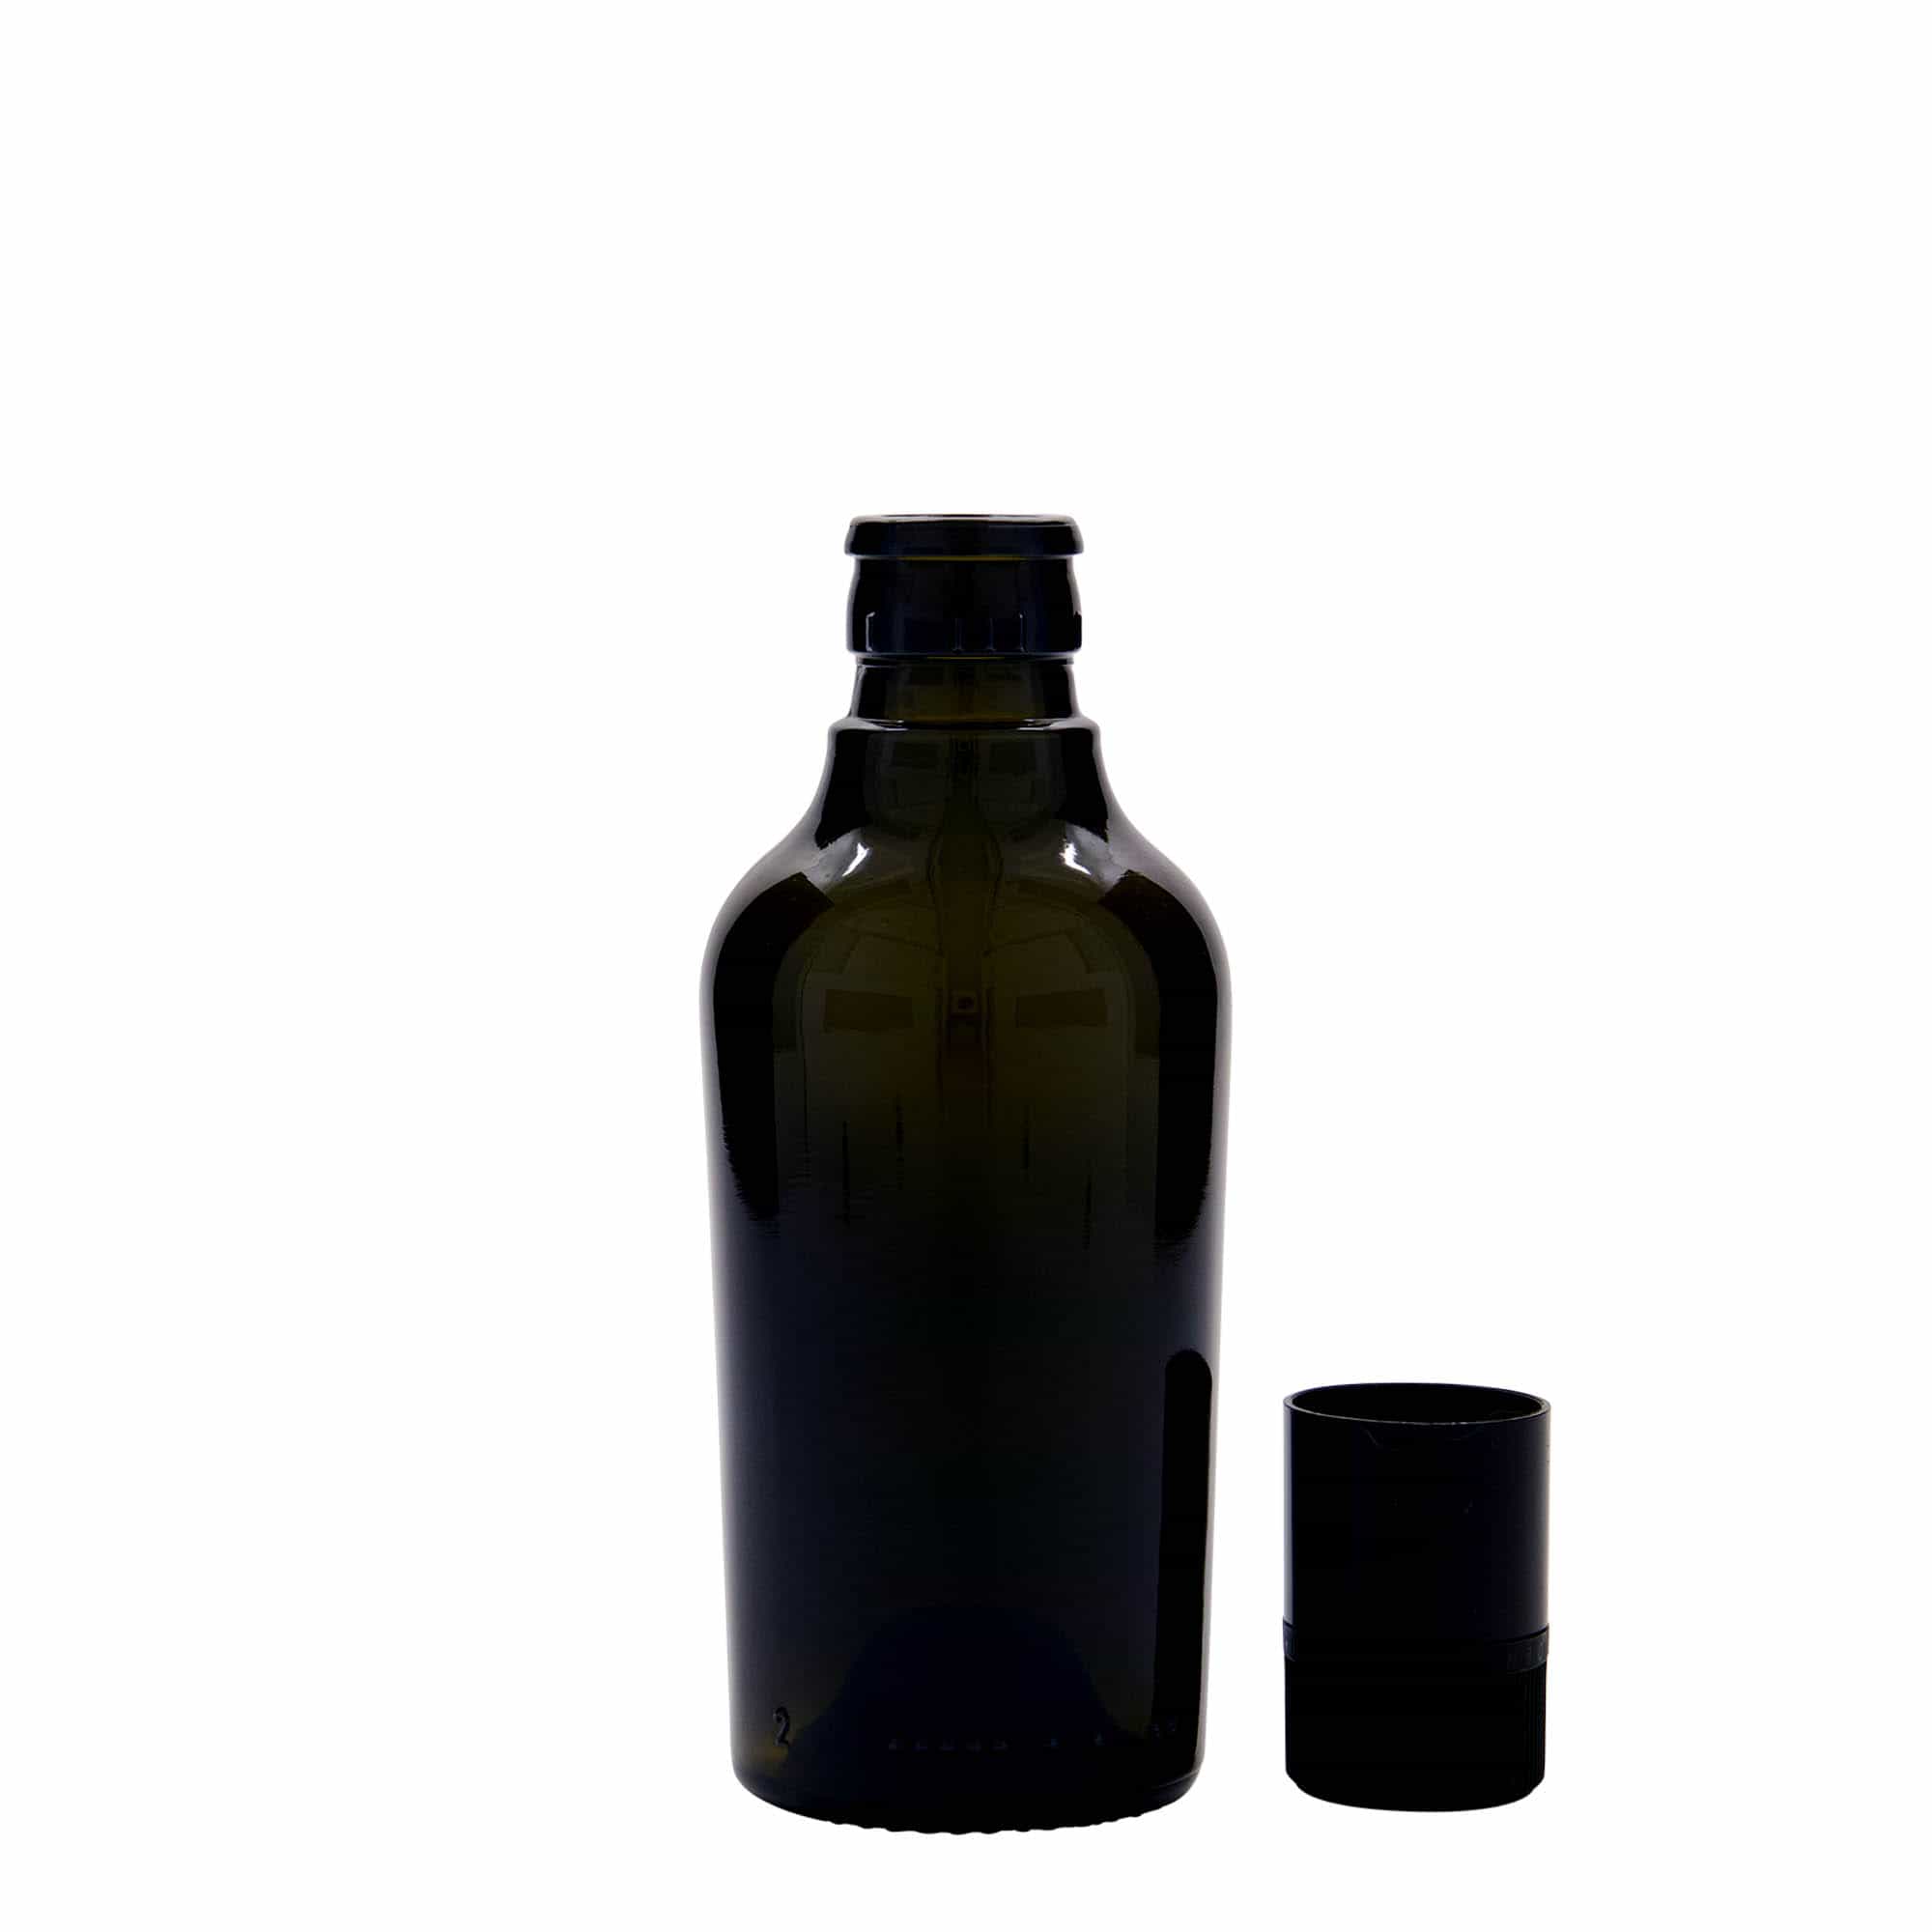 Aceitera/vinagrera 'Oleum' de 250 ml, vidrio, verde antiguo, boca: DOP